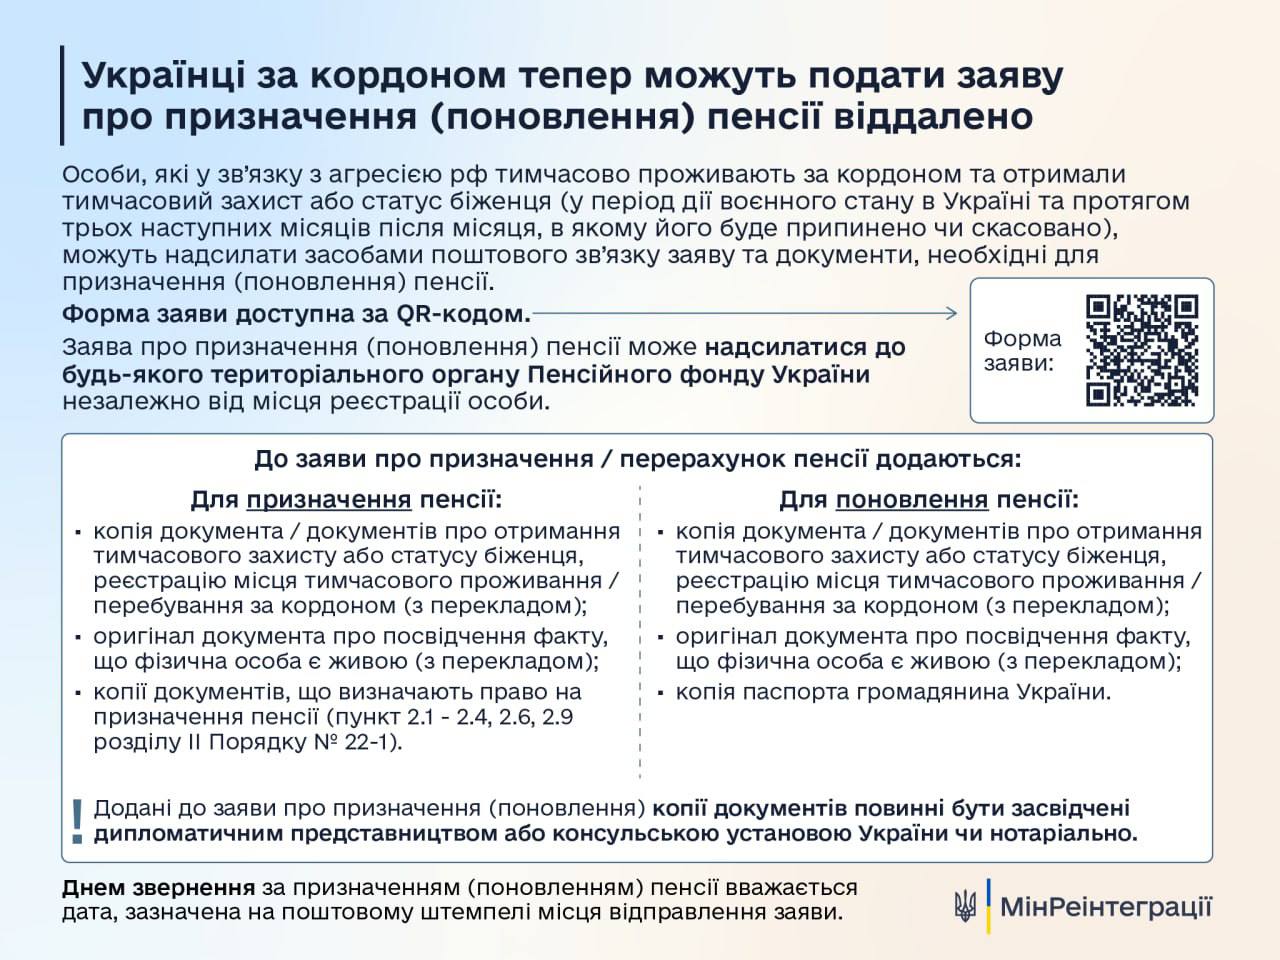 Украинцам за границей разрешили подавать онлайн-заявления на получение пенсий, - Минреинтеграции